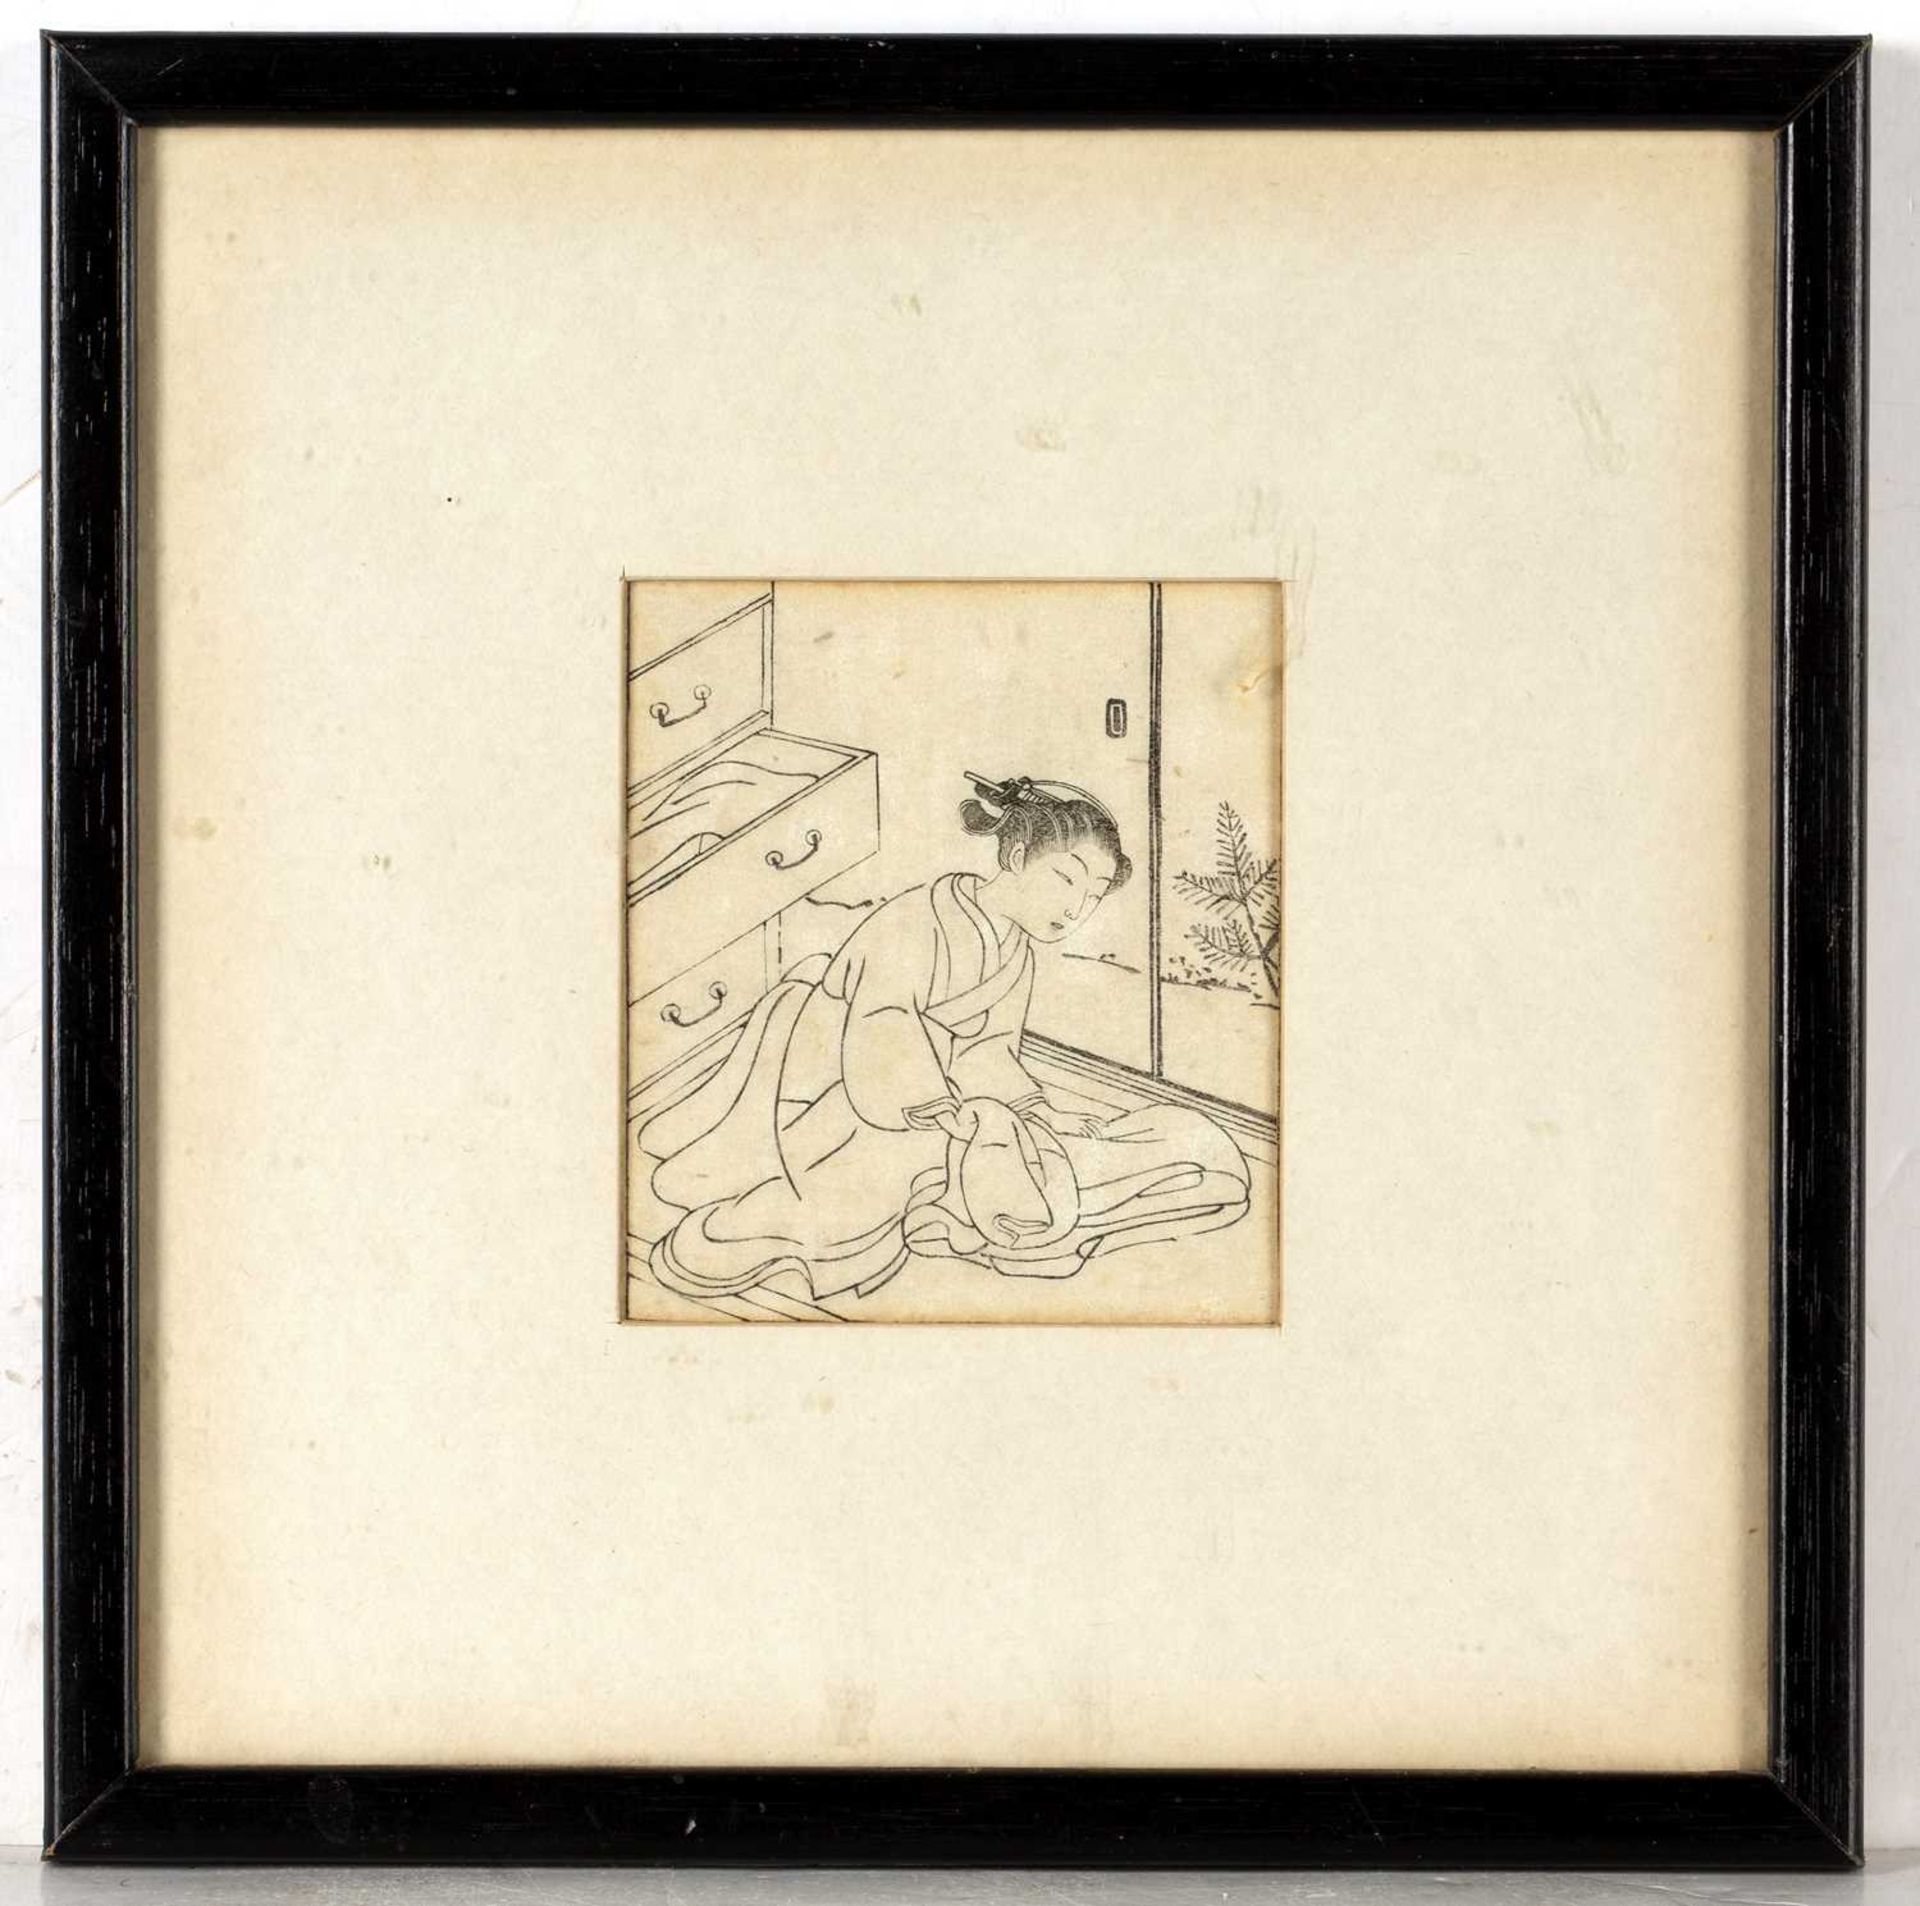 Suzuki Harunobu (1725-1770) 'Untitled print of Harunobu' Japanese woodblock ink proof, unsigned, 9cm - Image 3 of 4